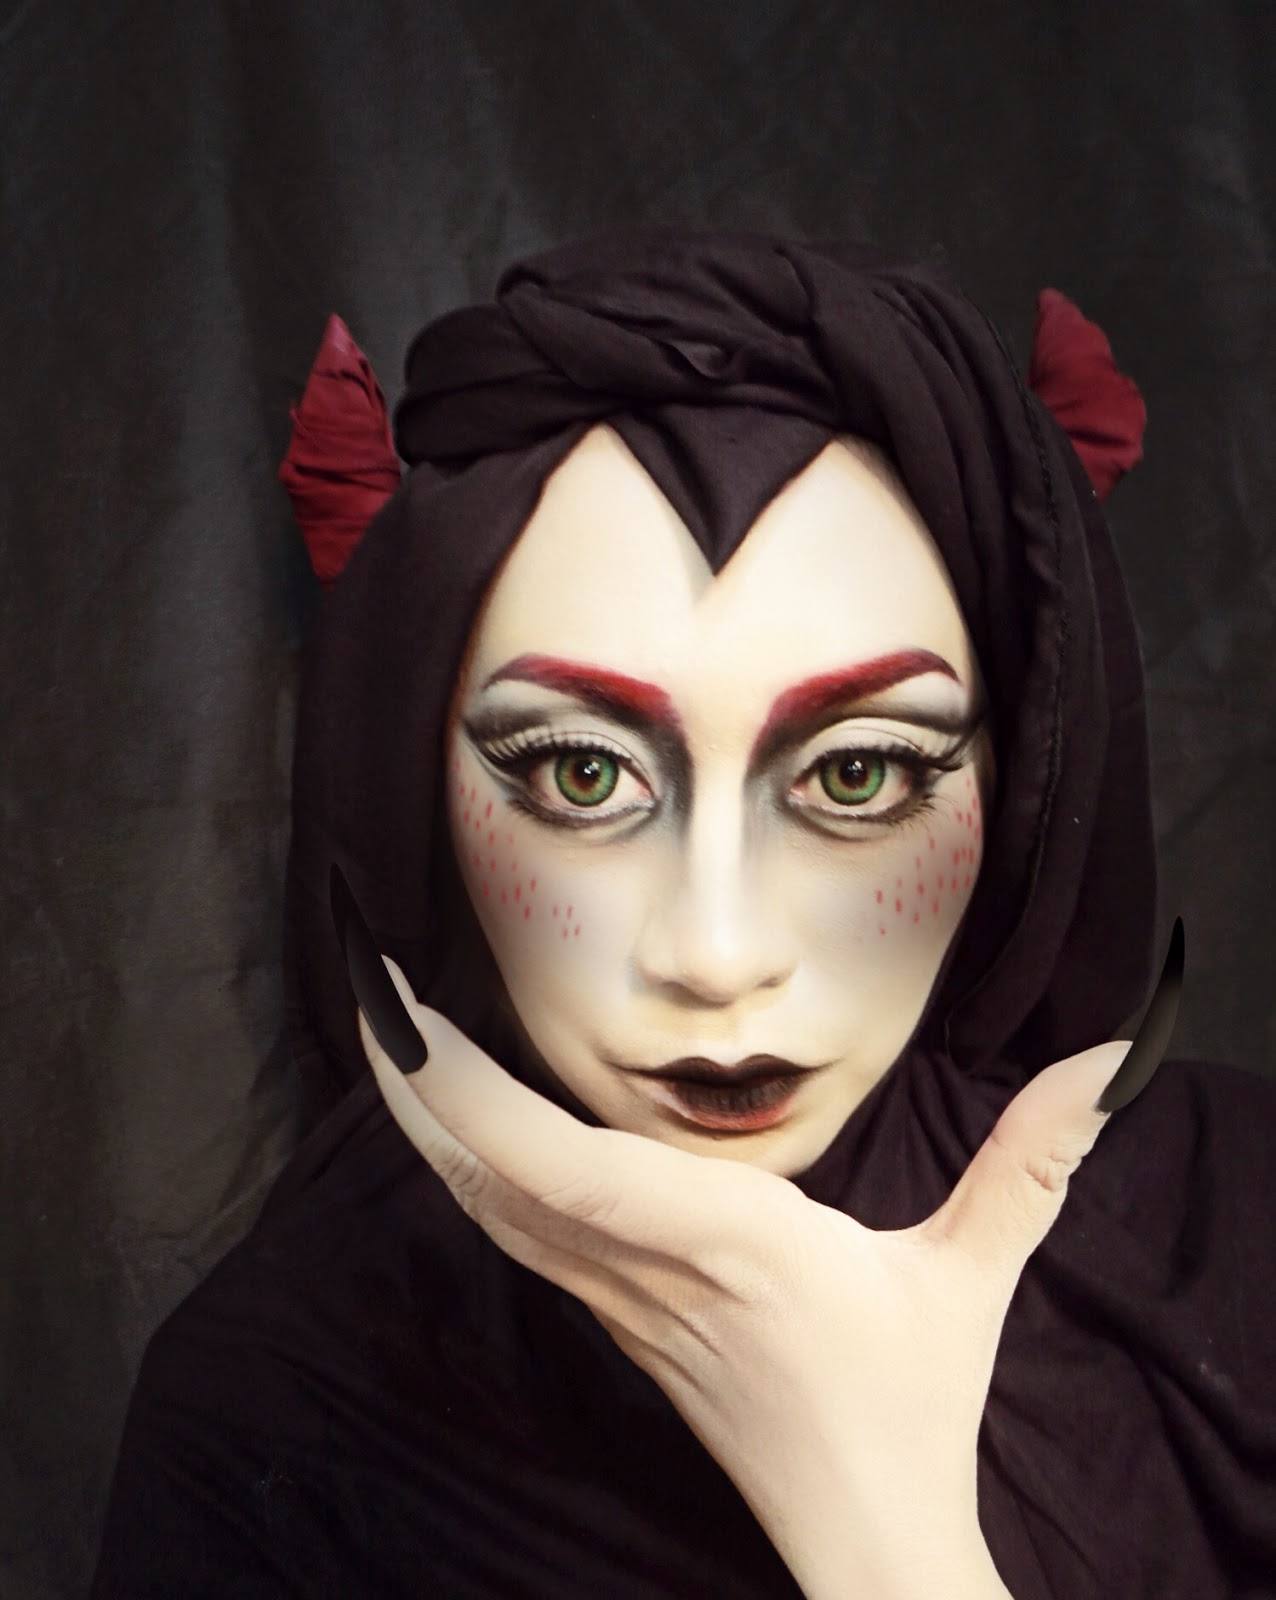 Ini Vindy Yang Ajaib Angel Vs Devil Makeup Collaboration